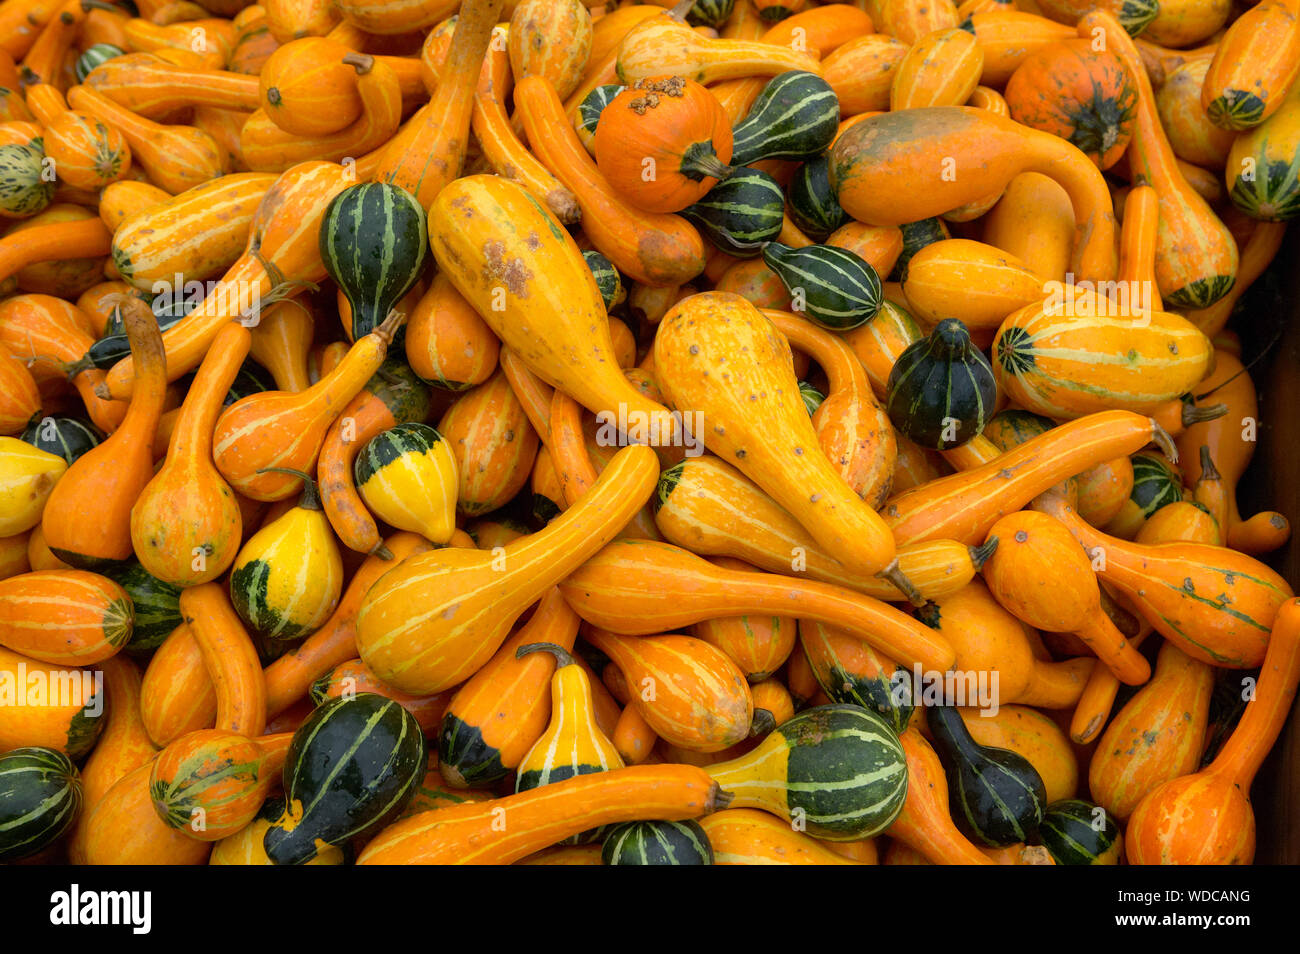 Display of various pumpkins and squashes Stock Photo